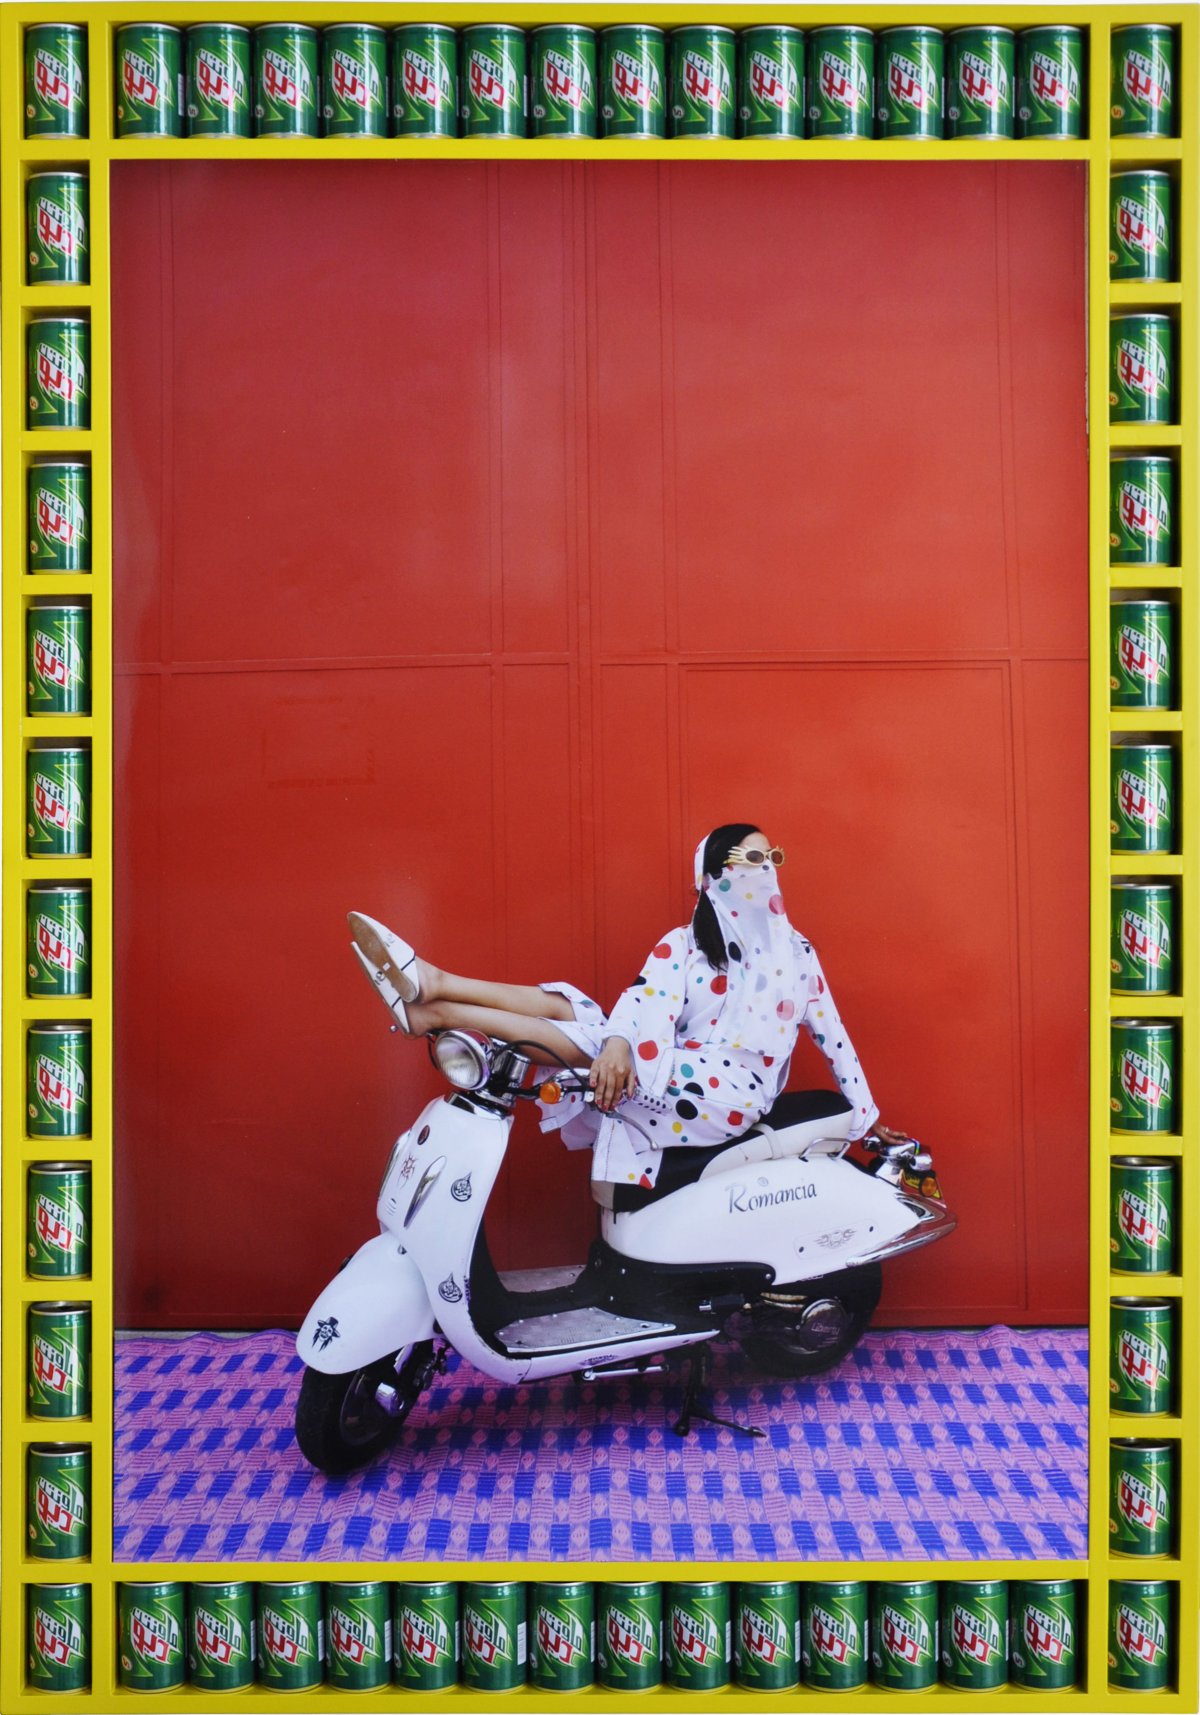 ‘Kesh Angels: Las mujeres motociclistas de Hassan Hajjaj